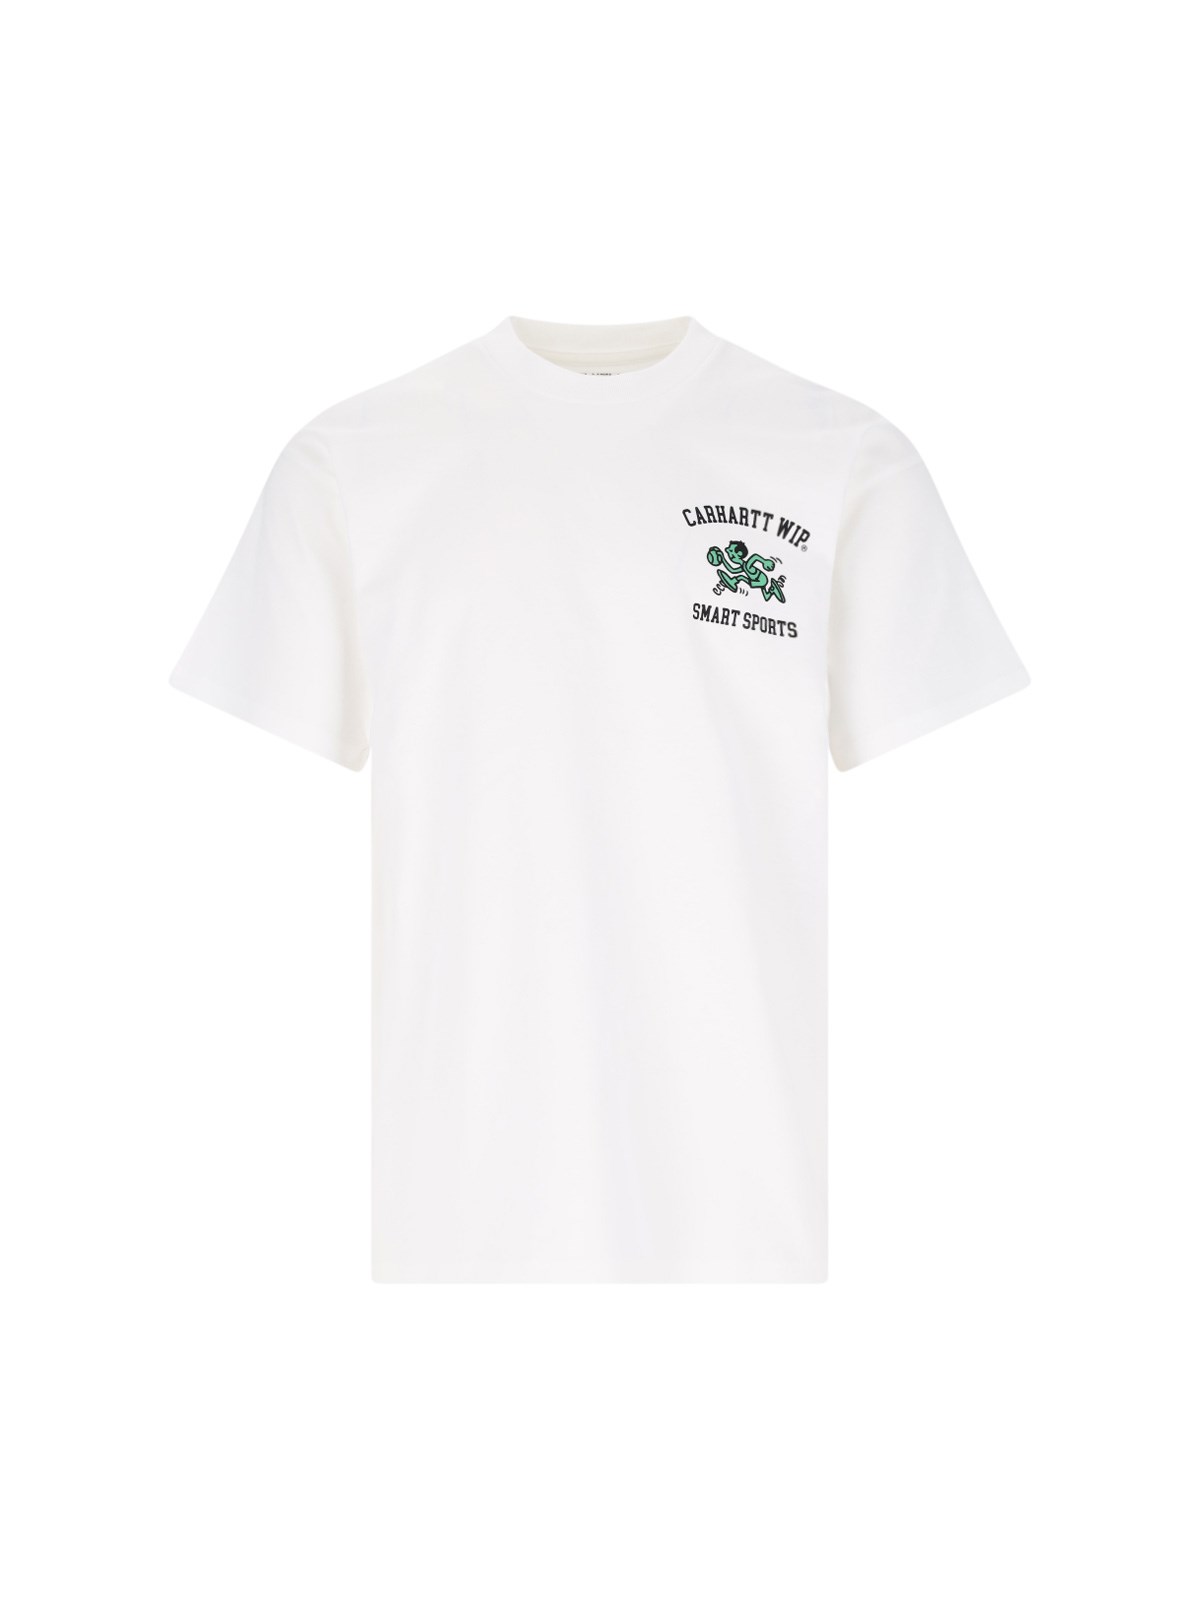 Carhartt 's/s Smart Sports' T-shirt In White